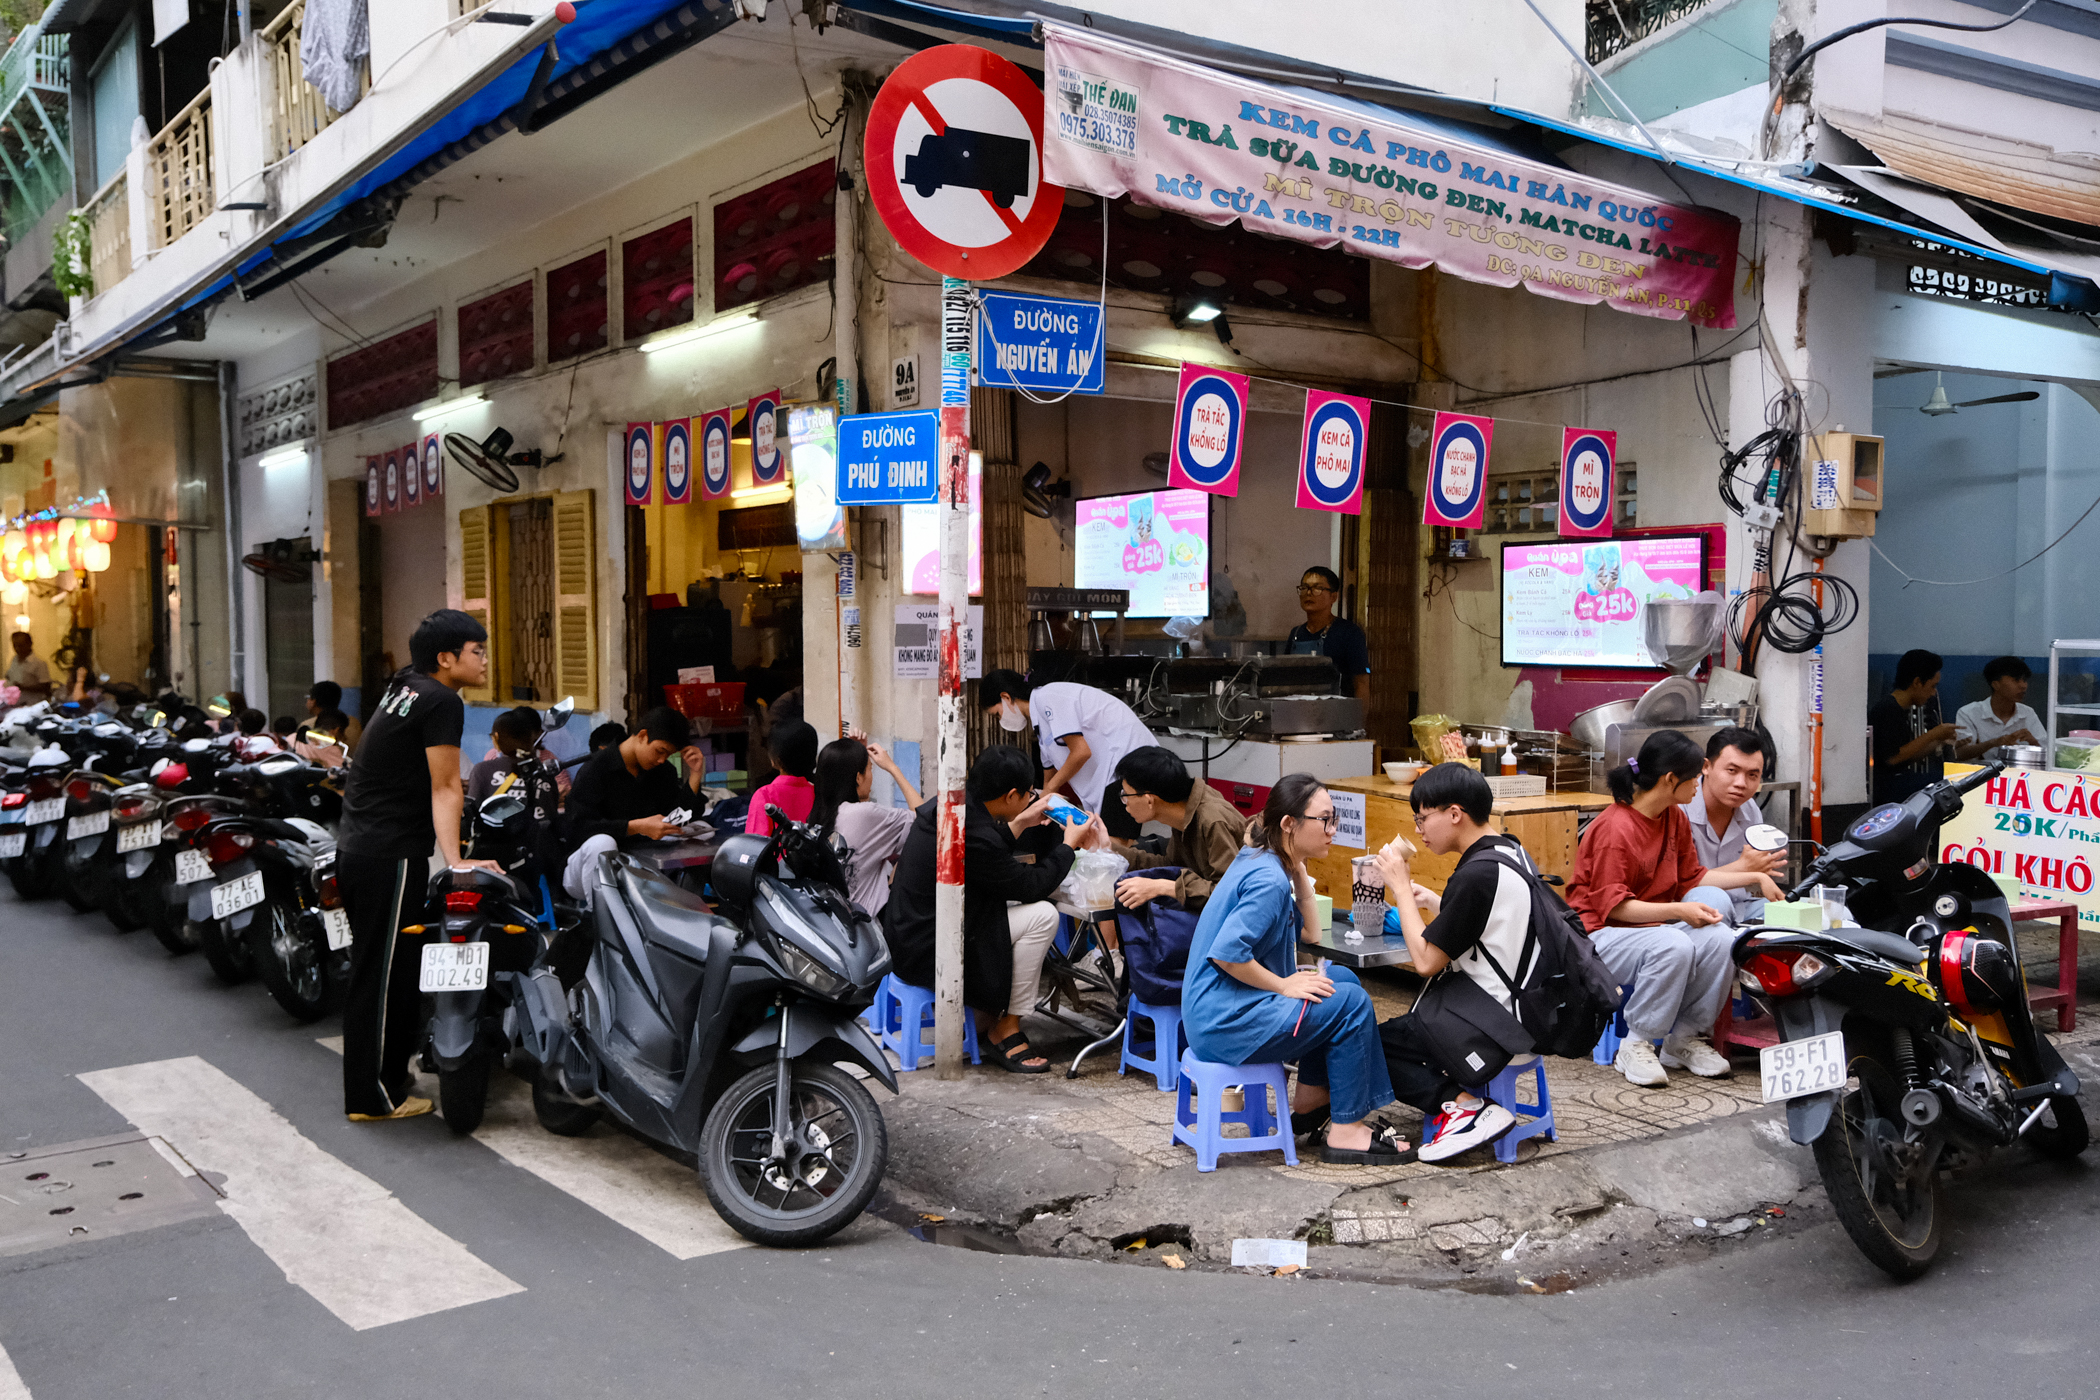 Street corner during tet trung thu in district 5